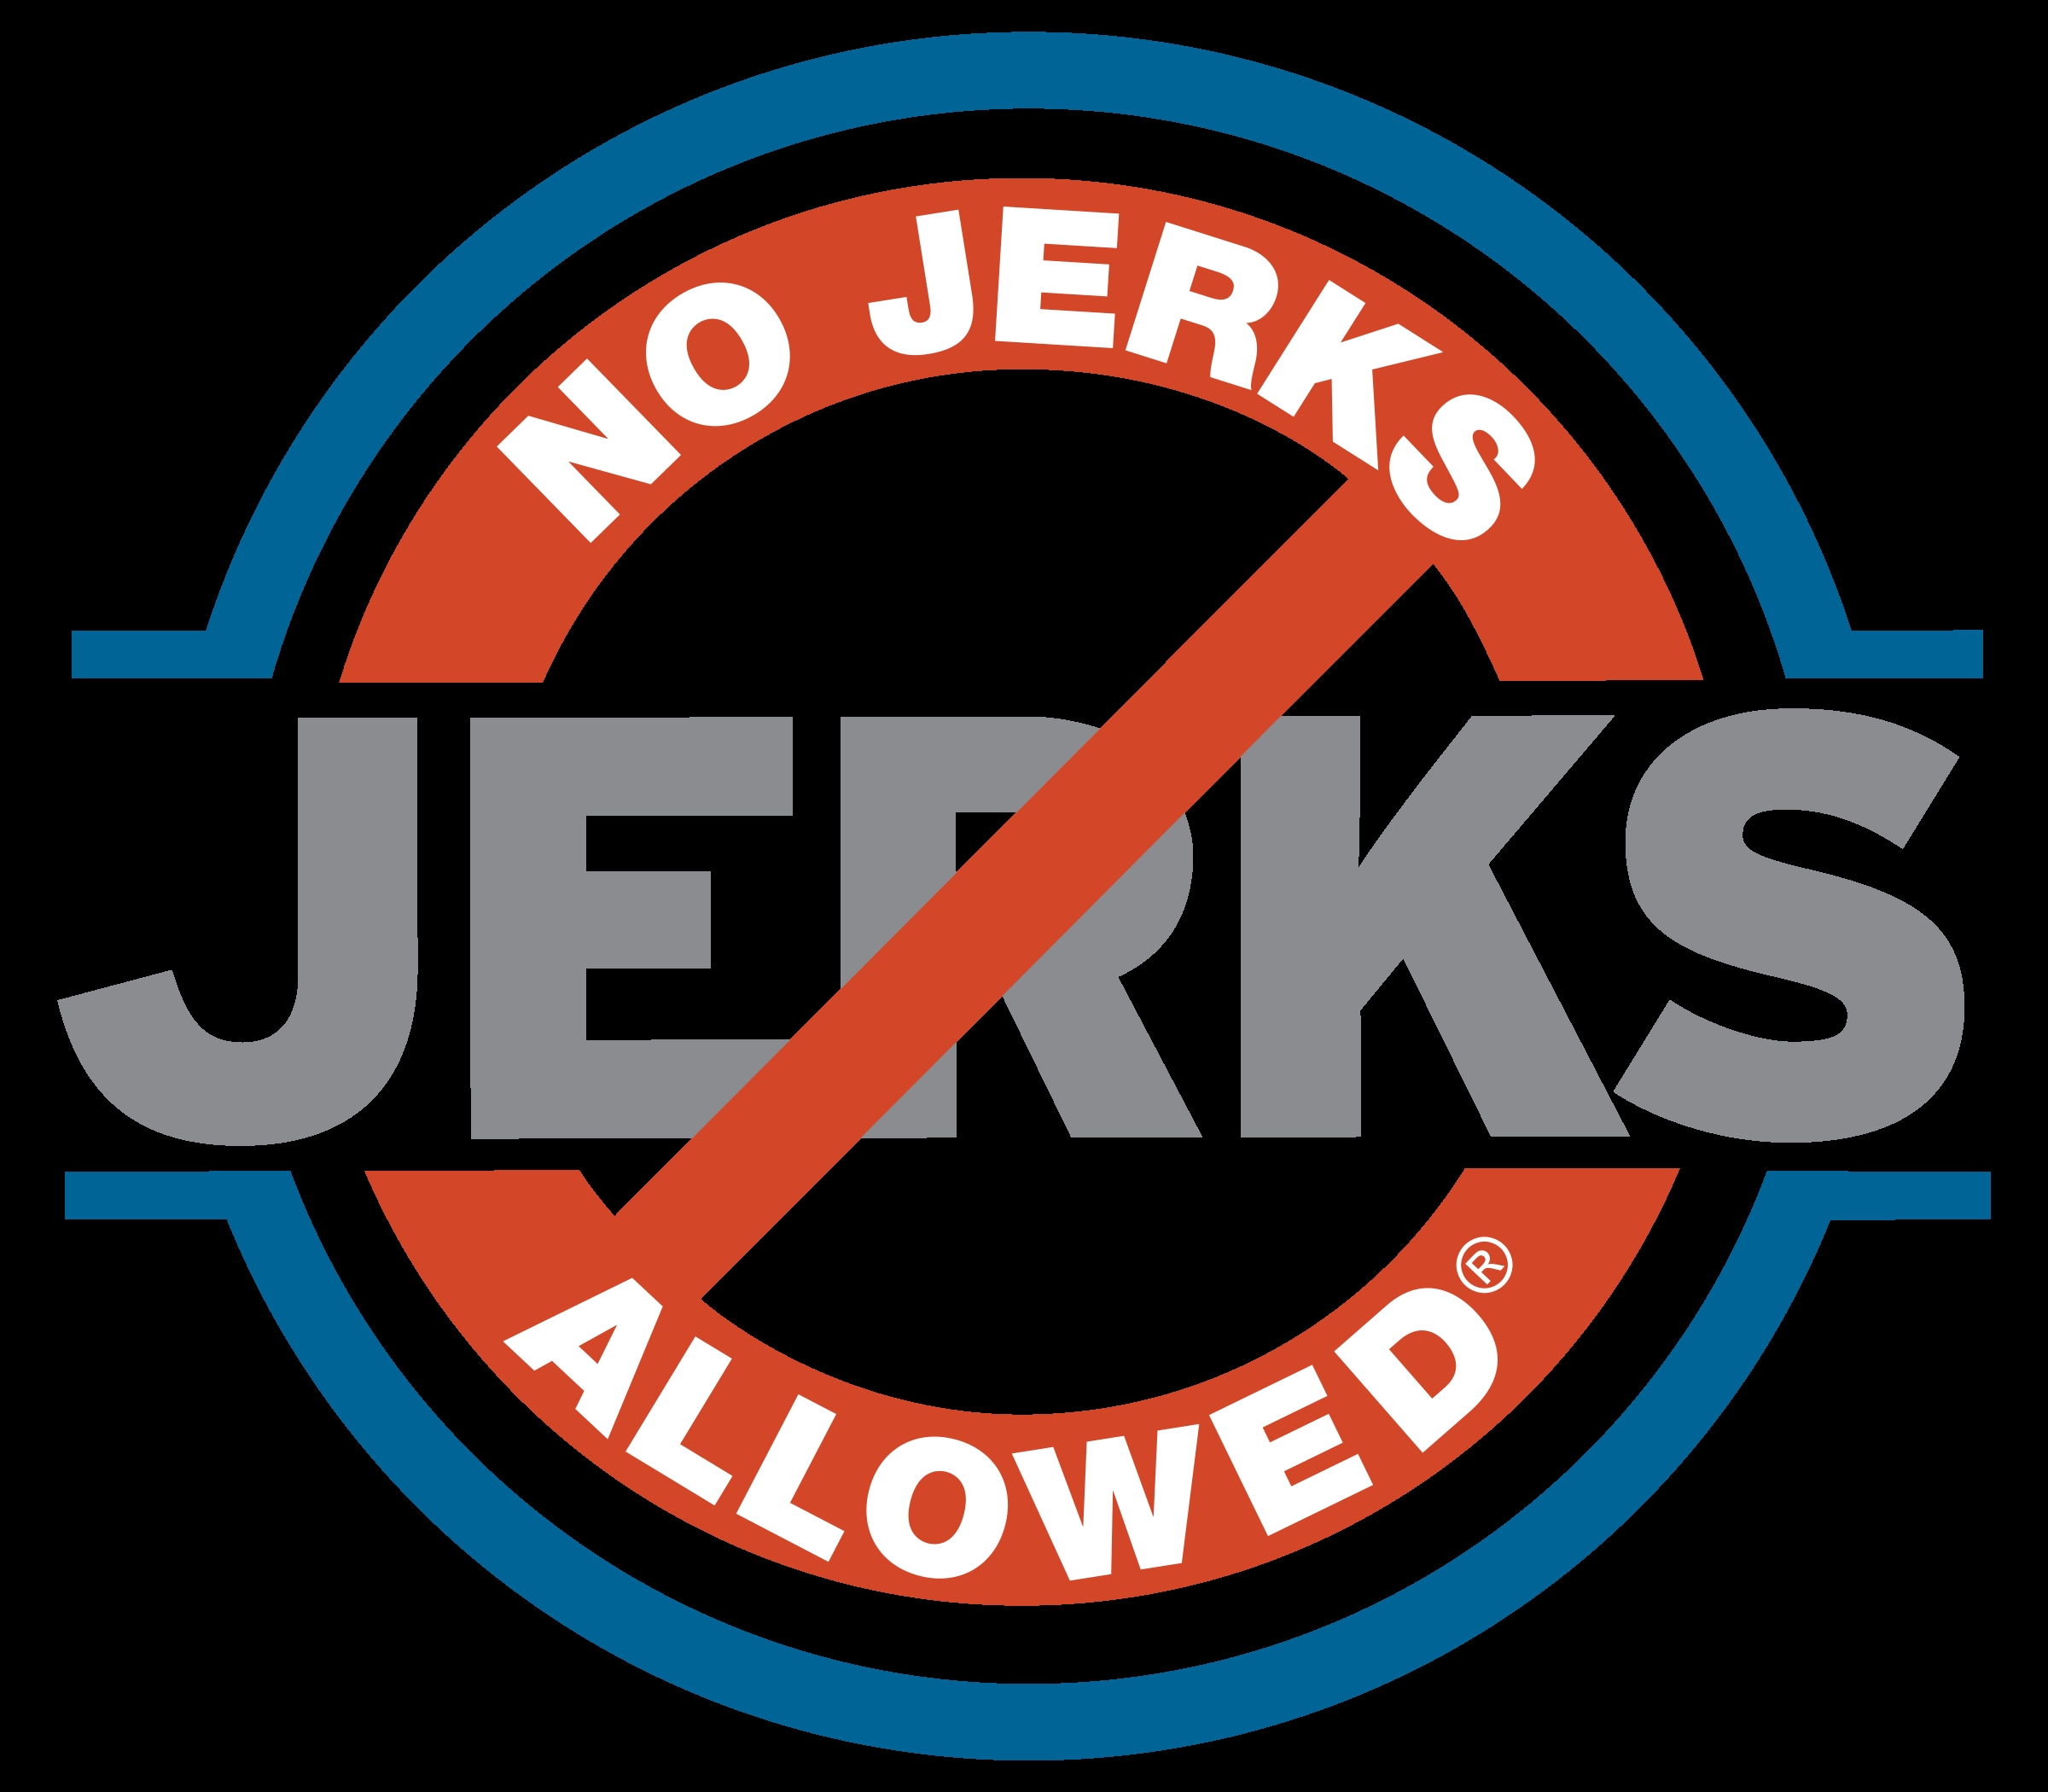 No_Jerks_logo.png